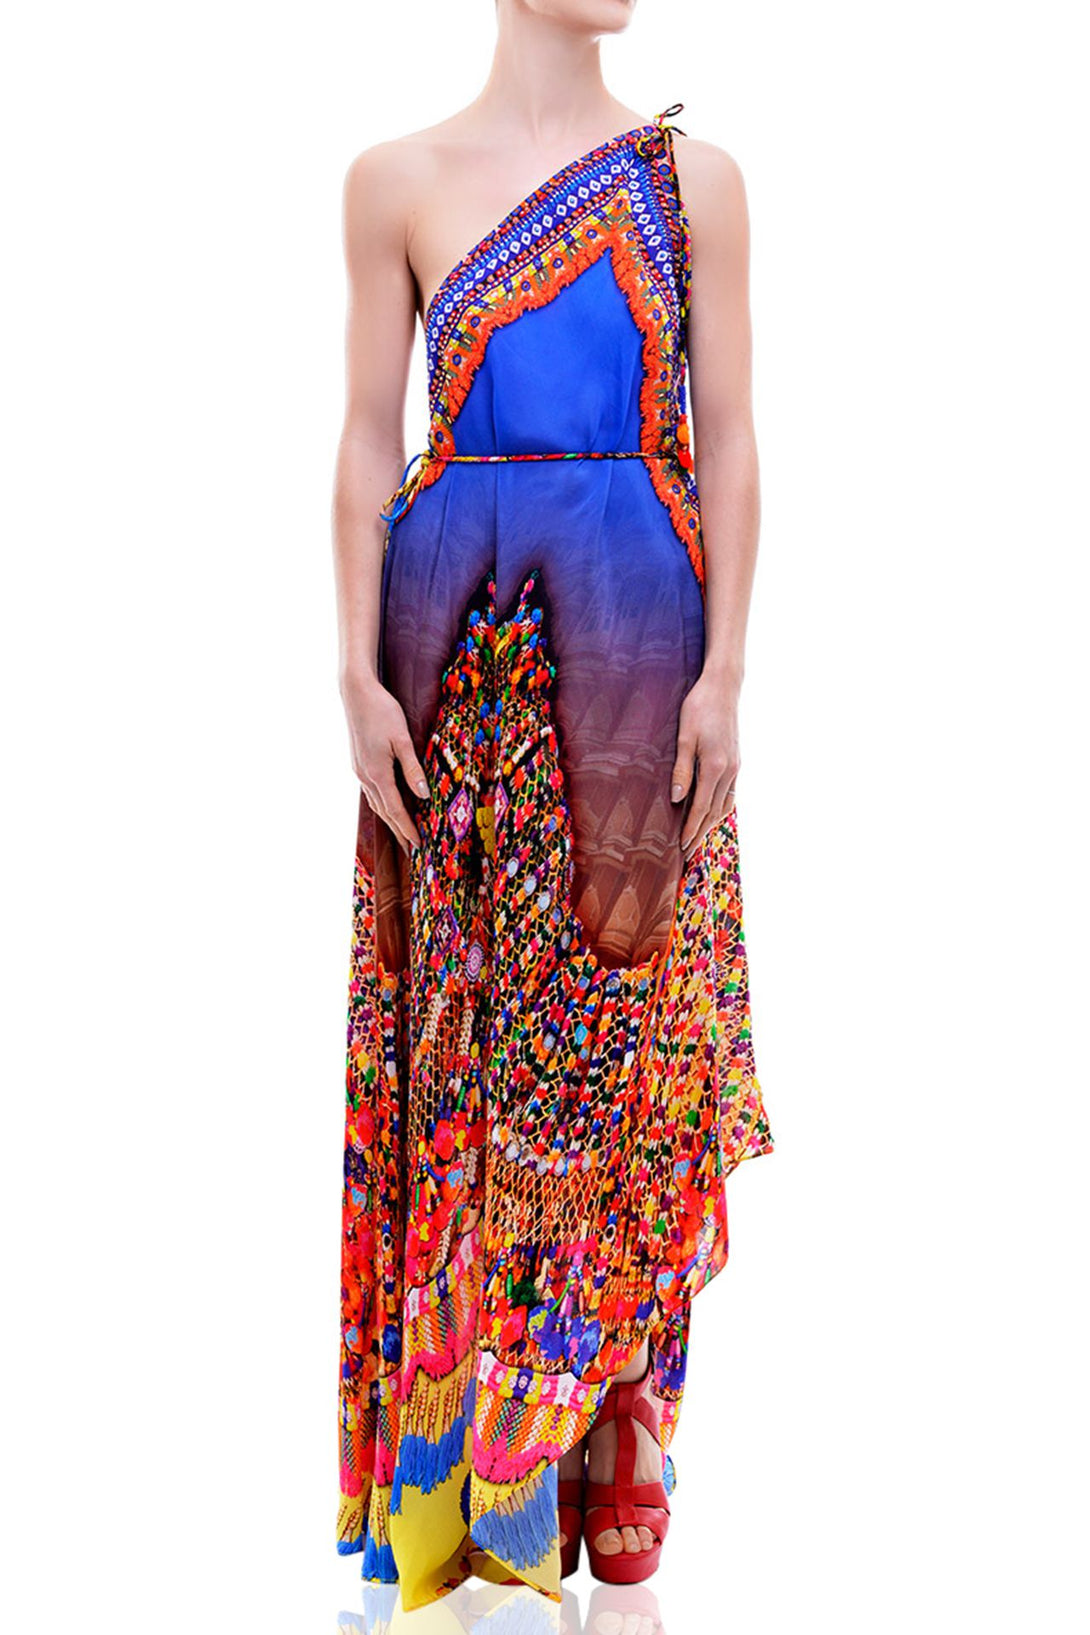  long sleeve blue dress maxi, long summer dresses for women, plunge neck cocktail dress, Shahida Parides,